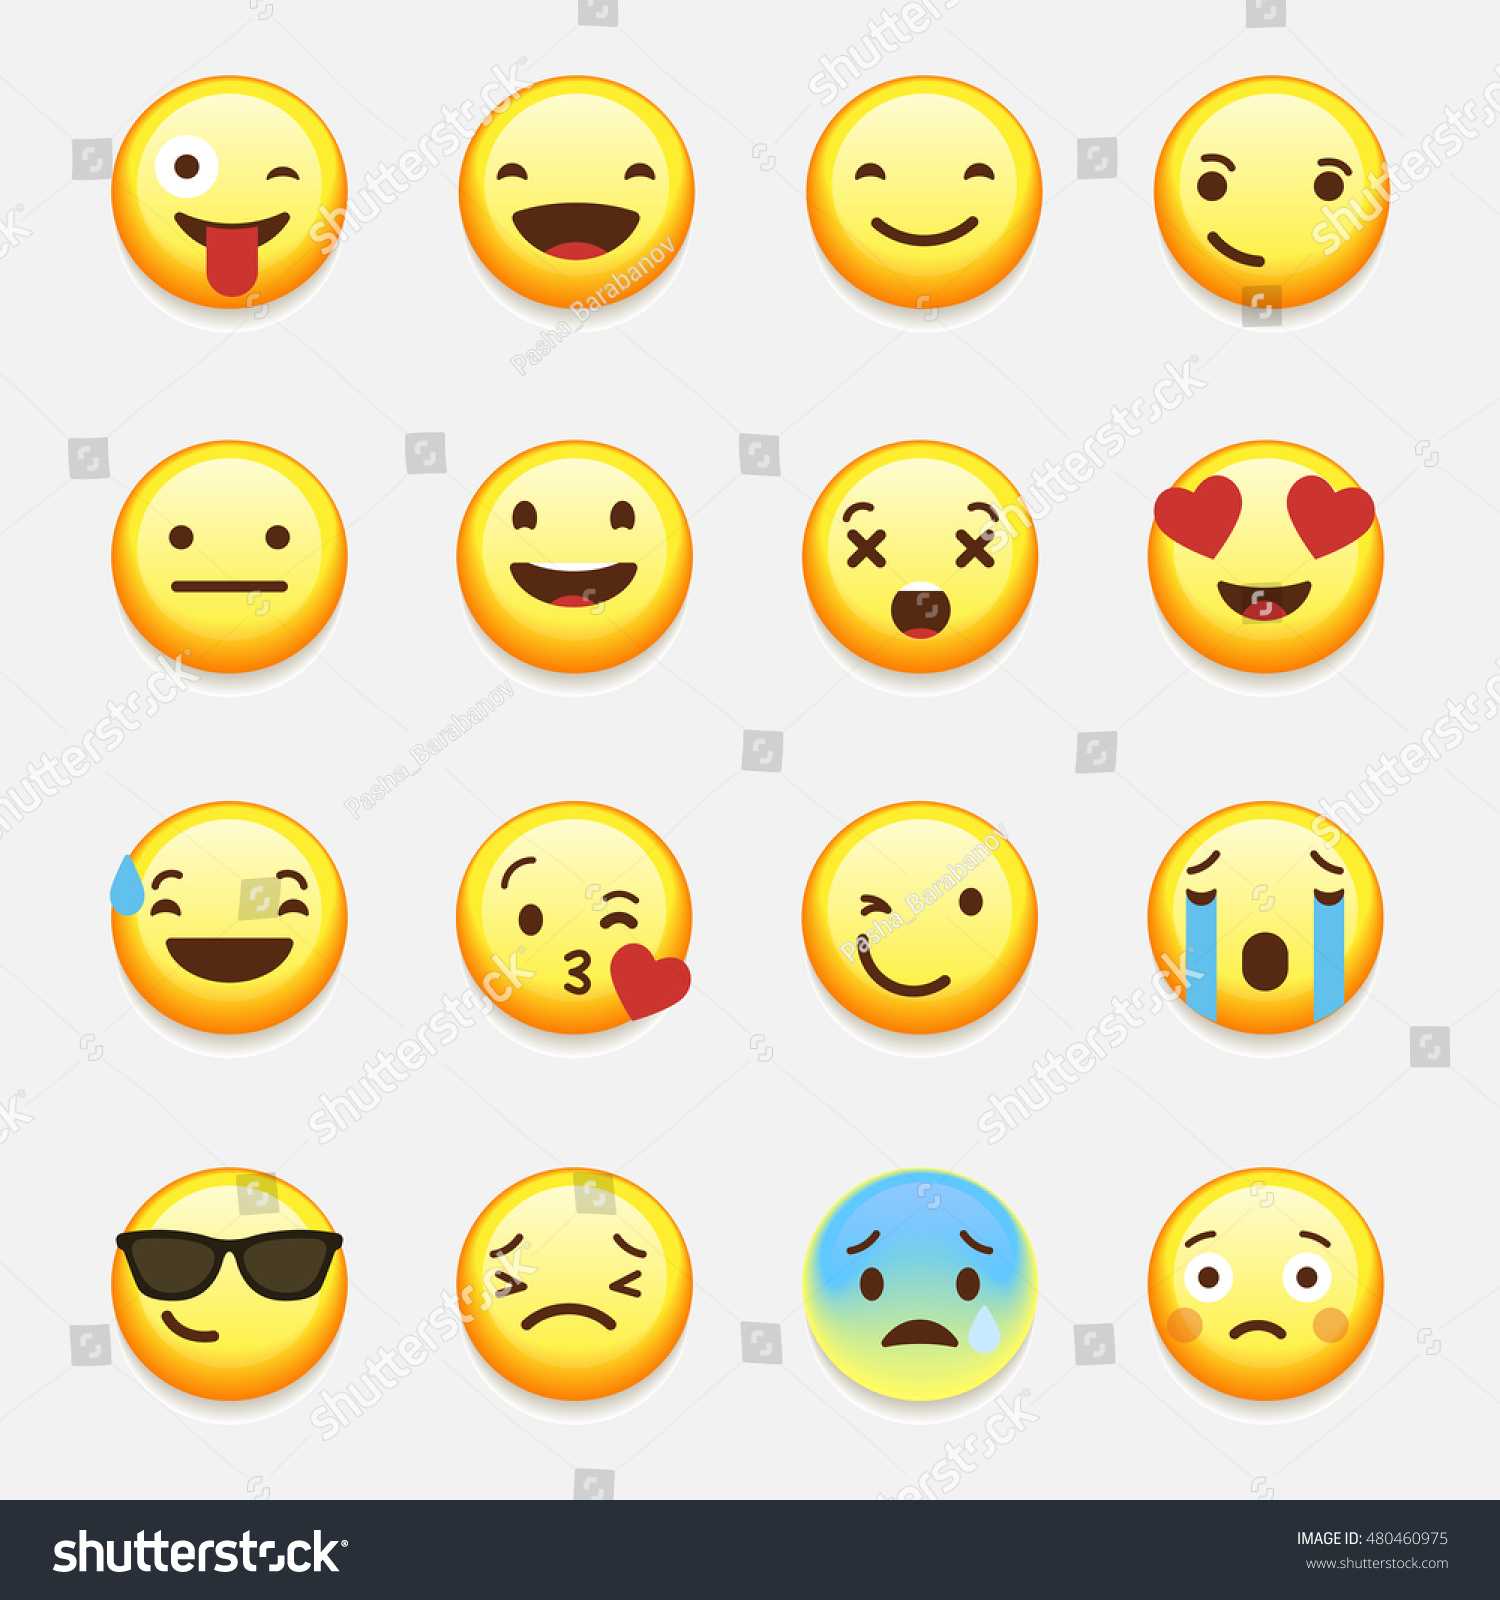 Set Of Emoji. Smile Icons. Stock Vector Illustration 480460975 ...